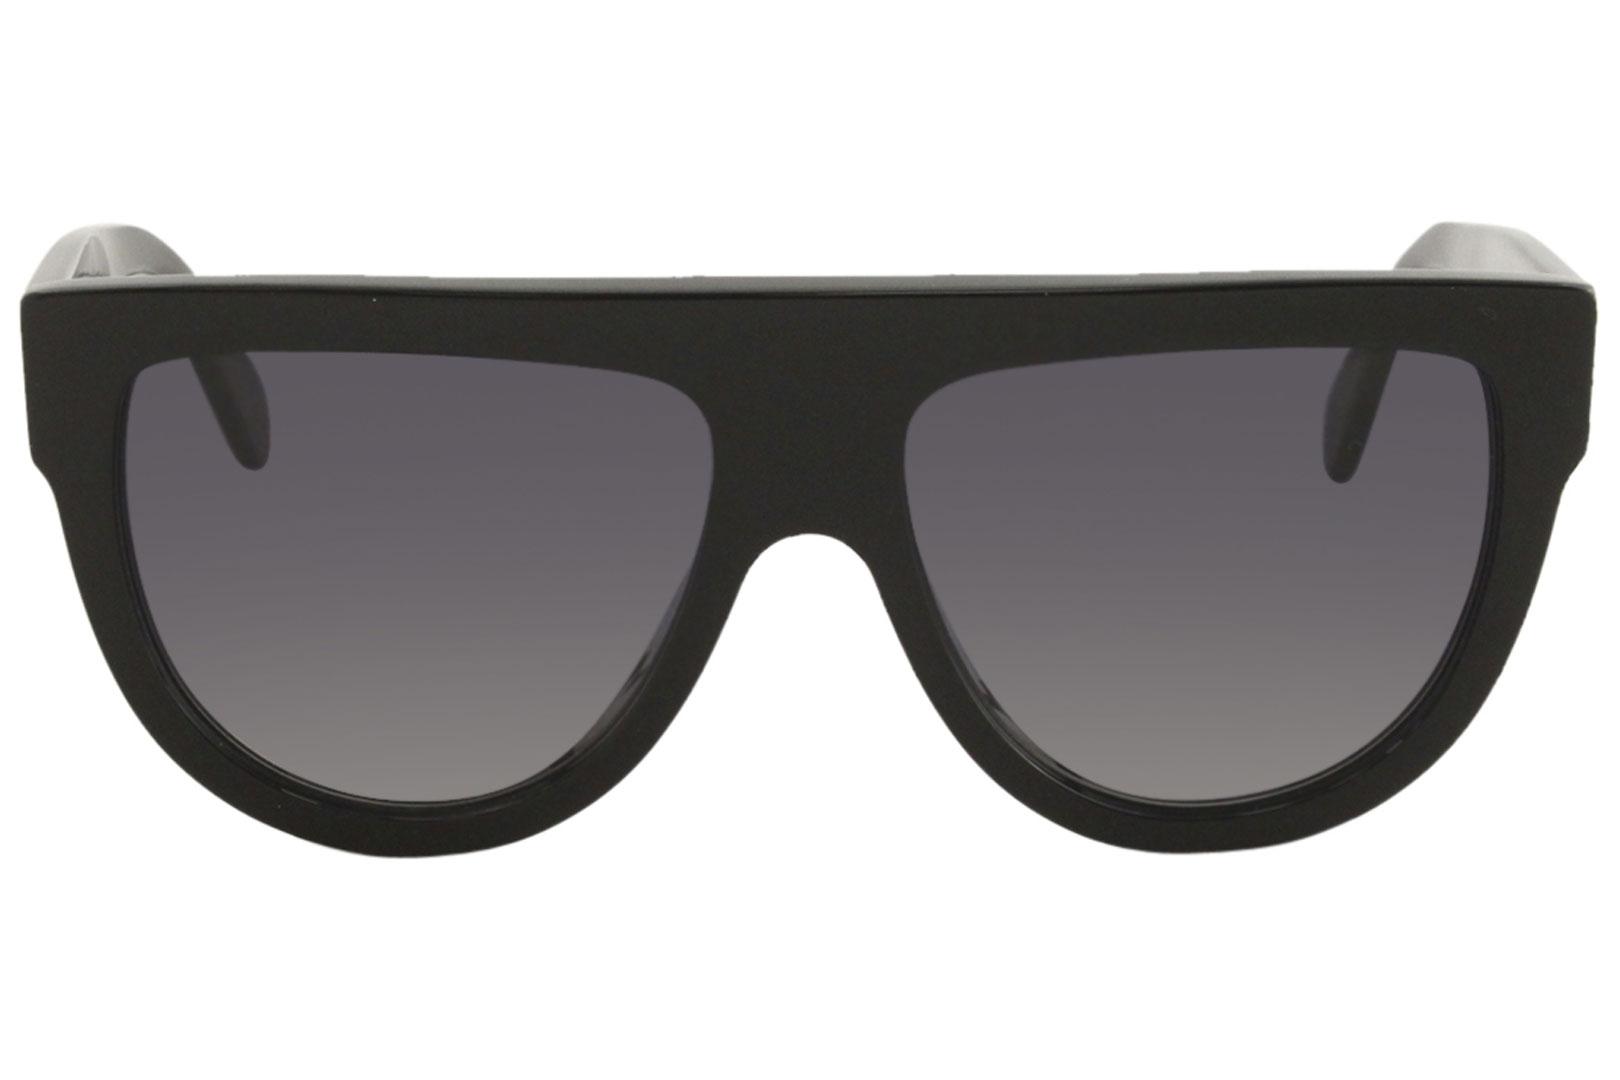 CELINE Square Sunglasses, 58mm